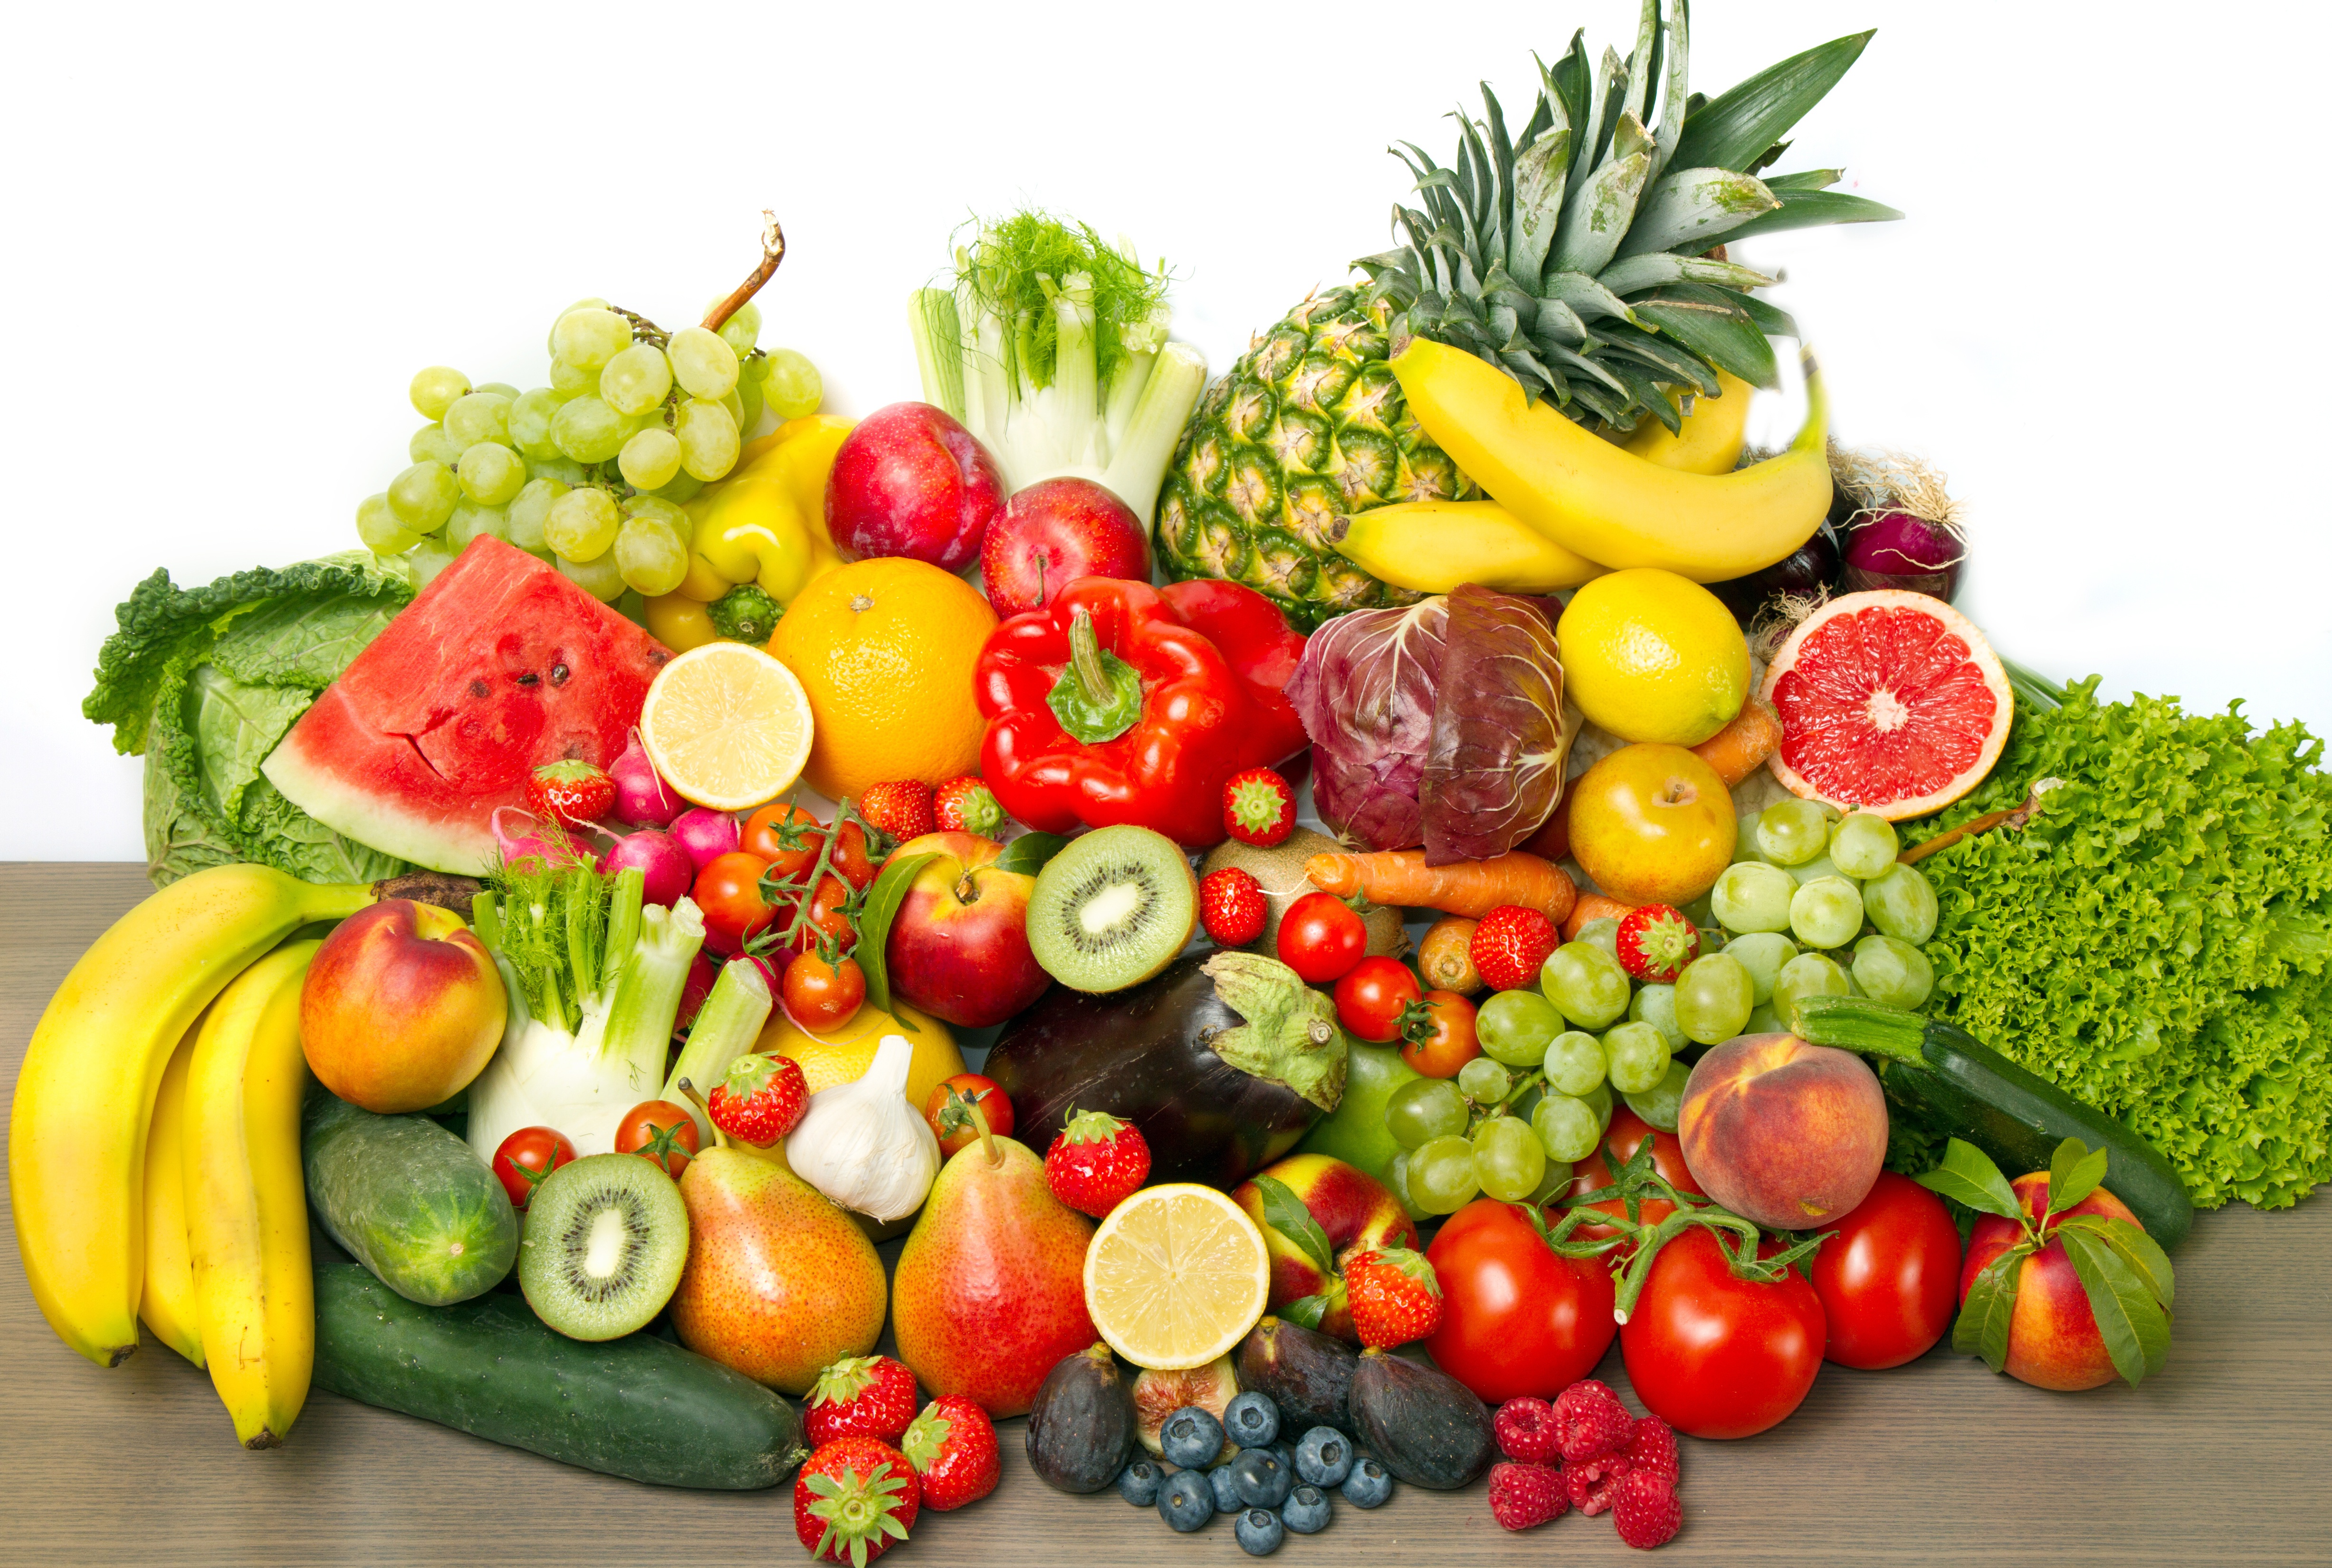 You like vegetables and fruits. Овощи и фрукты. Фрукт. Овощи, фрукты, ягоды. Красивые овощи.